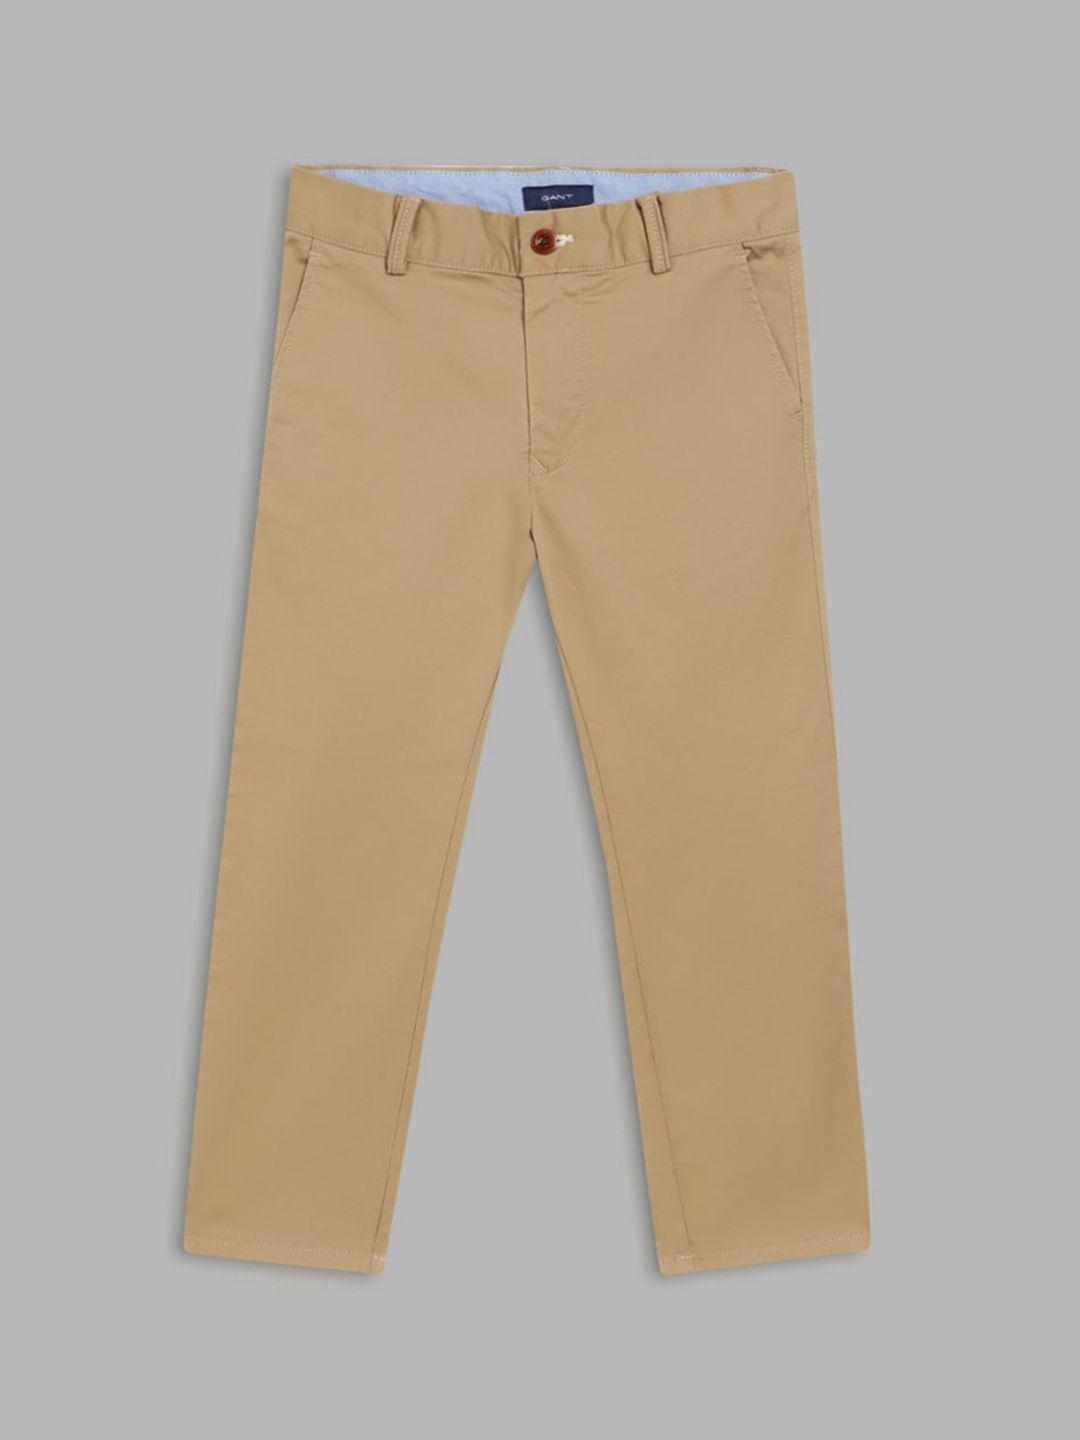 GANT Boys Khaki Cotton Trousers